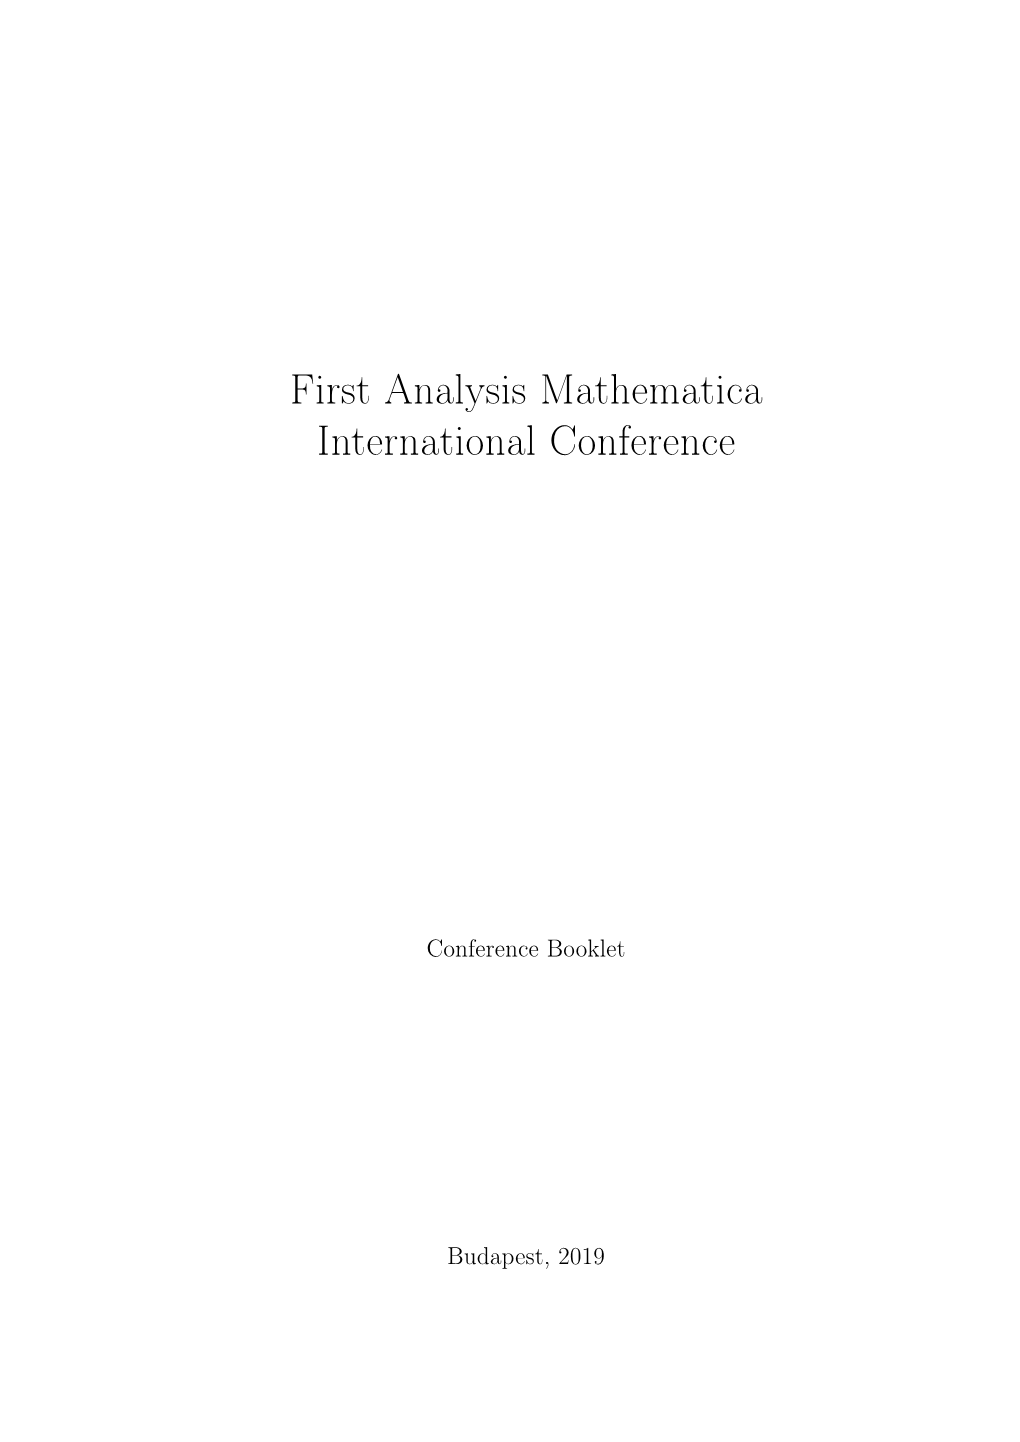 First Analysis Mathematica International Conference